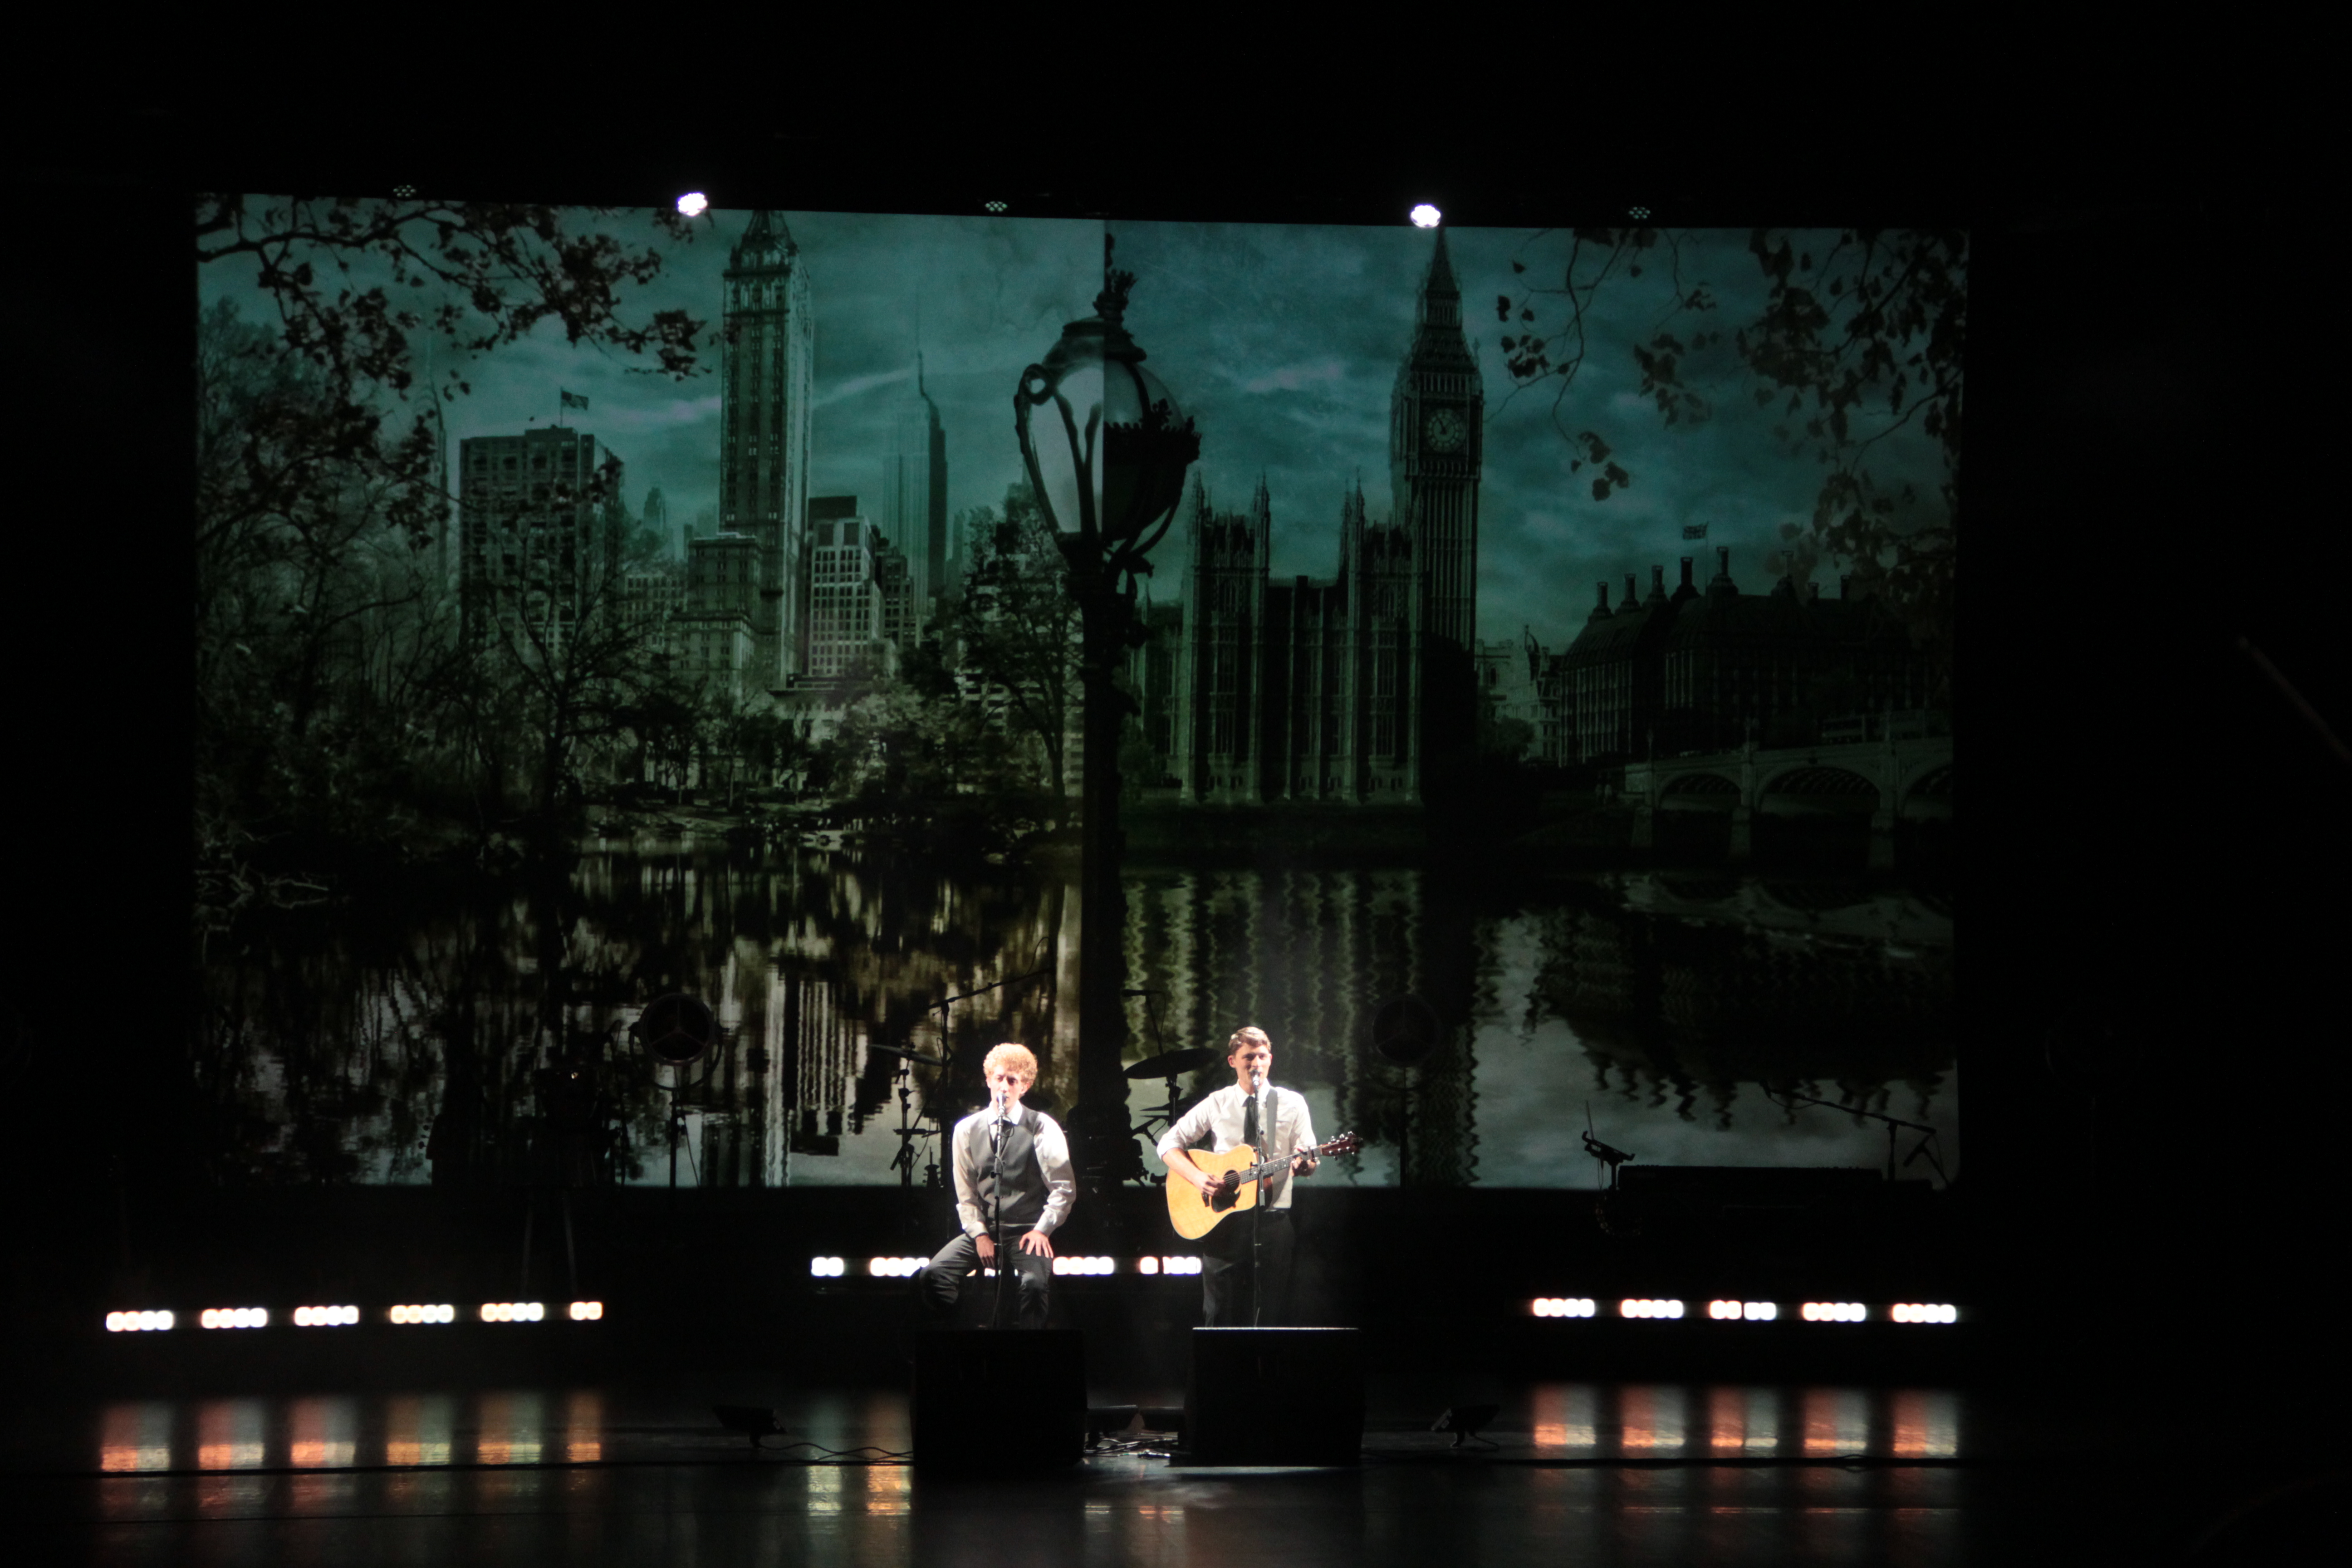 UPCOMING: The Simon & Garfunkel Story, March 18, Music Hall, Detroit